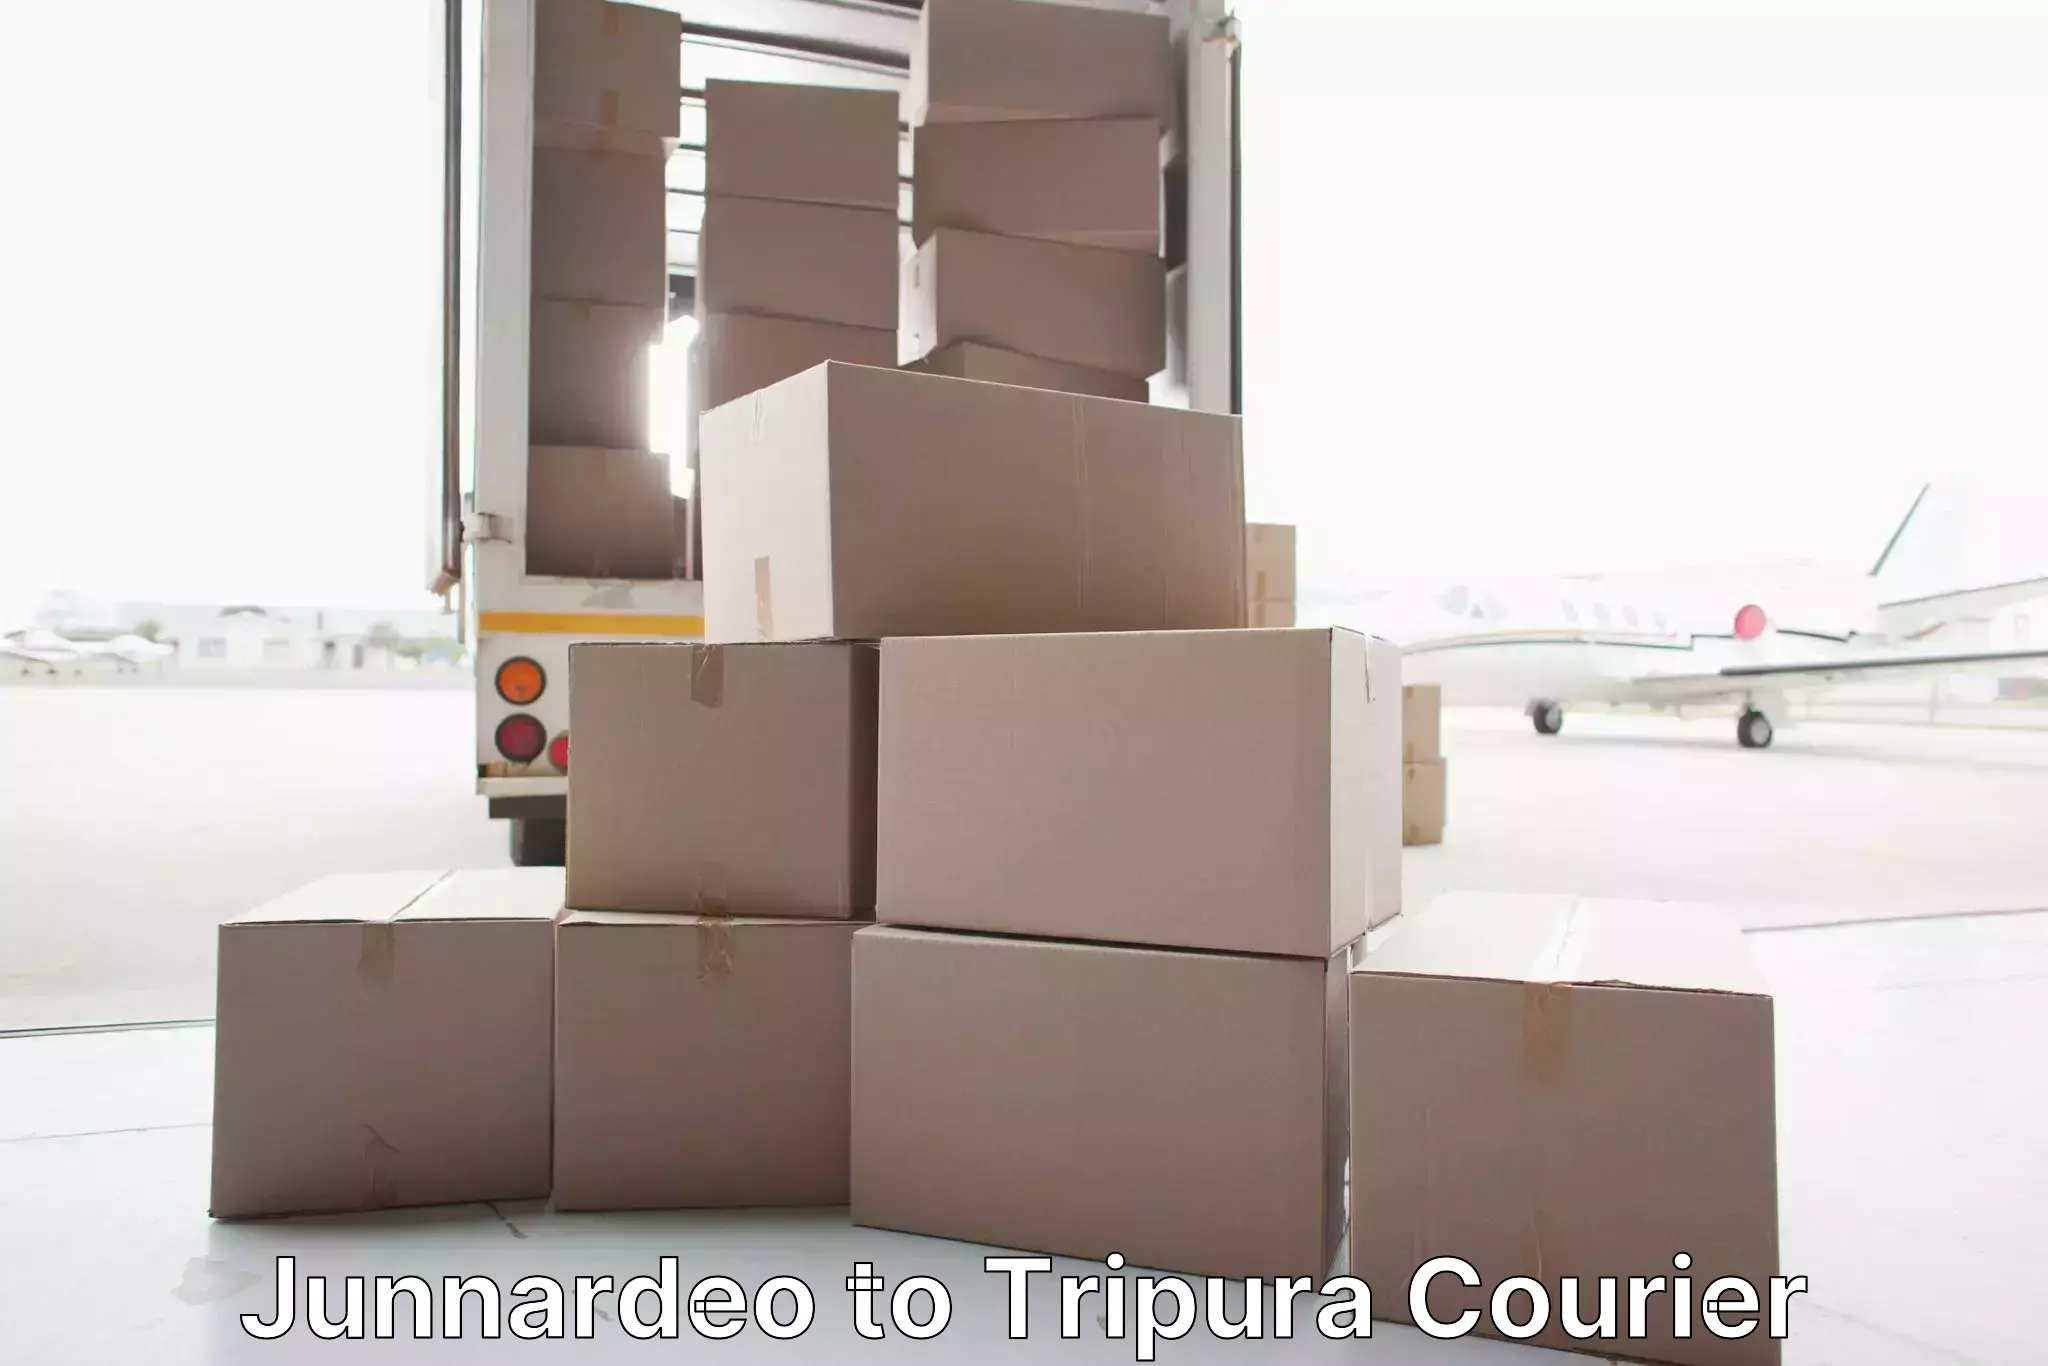 Professional goods transport in Junnardeo to Udaipur Tripura